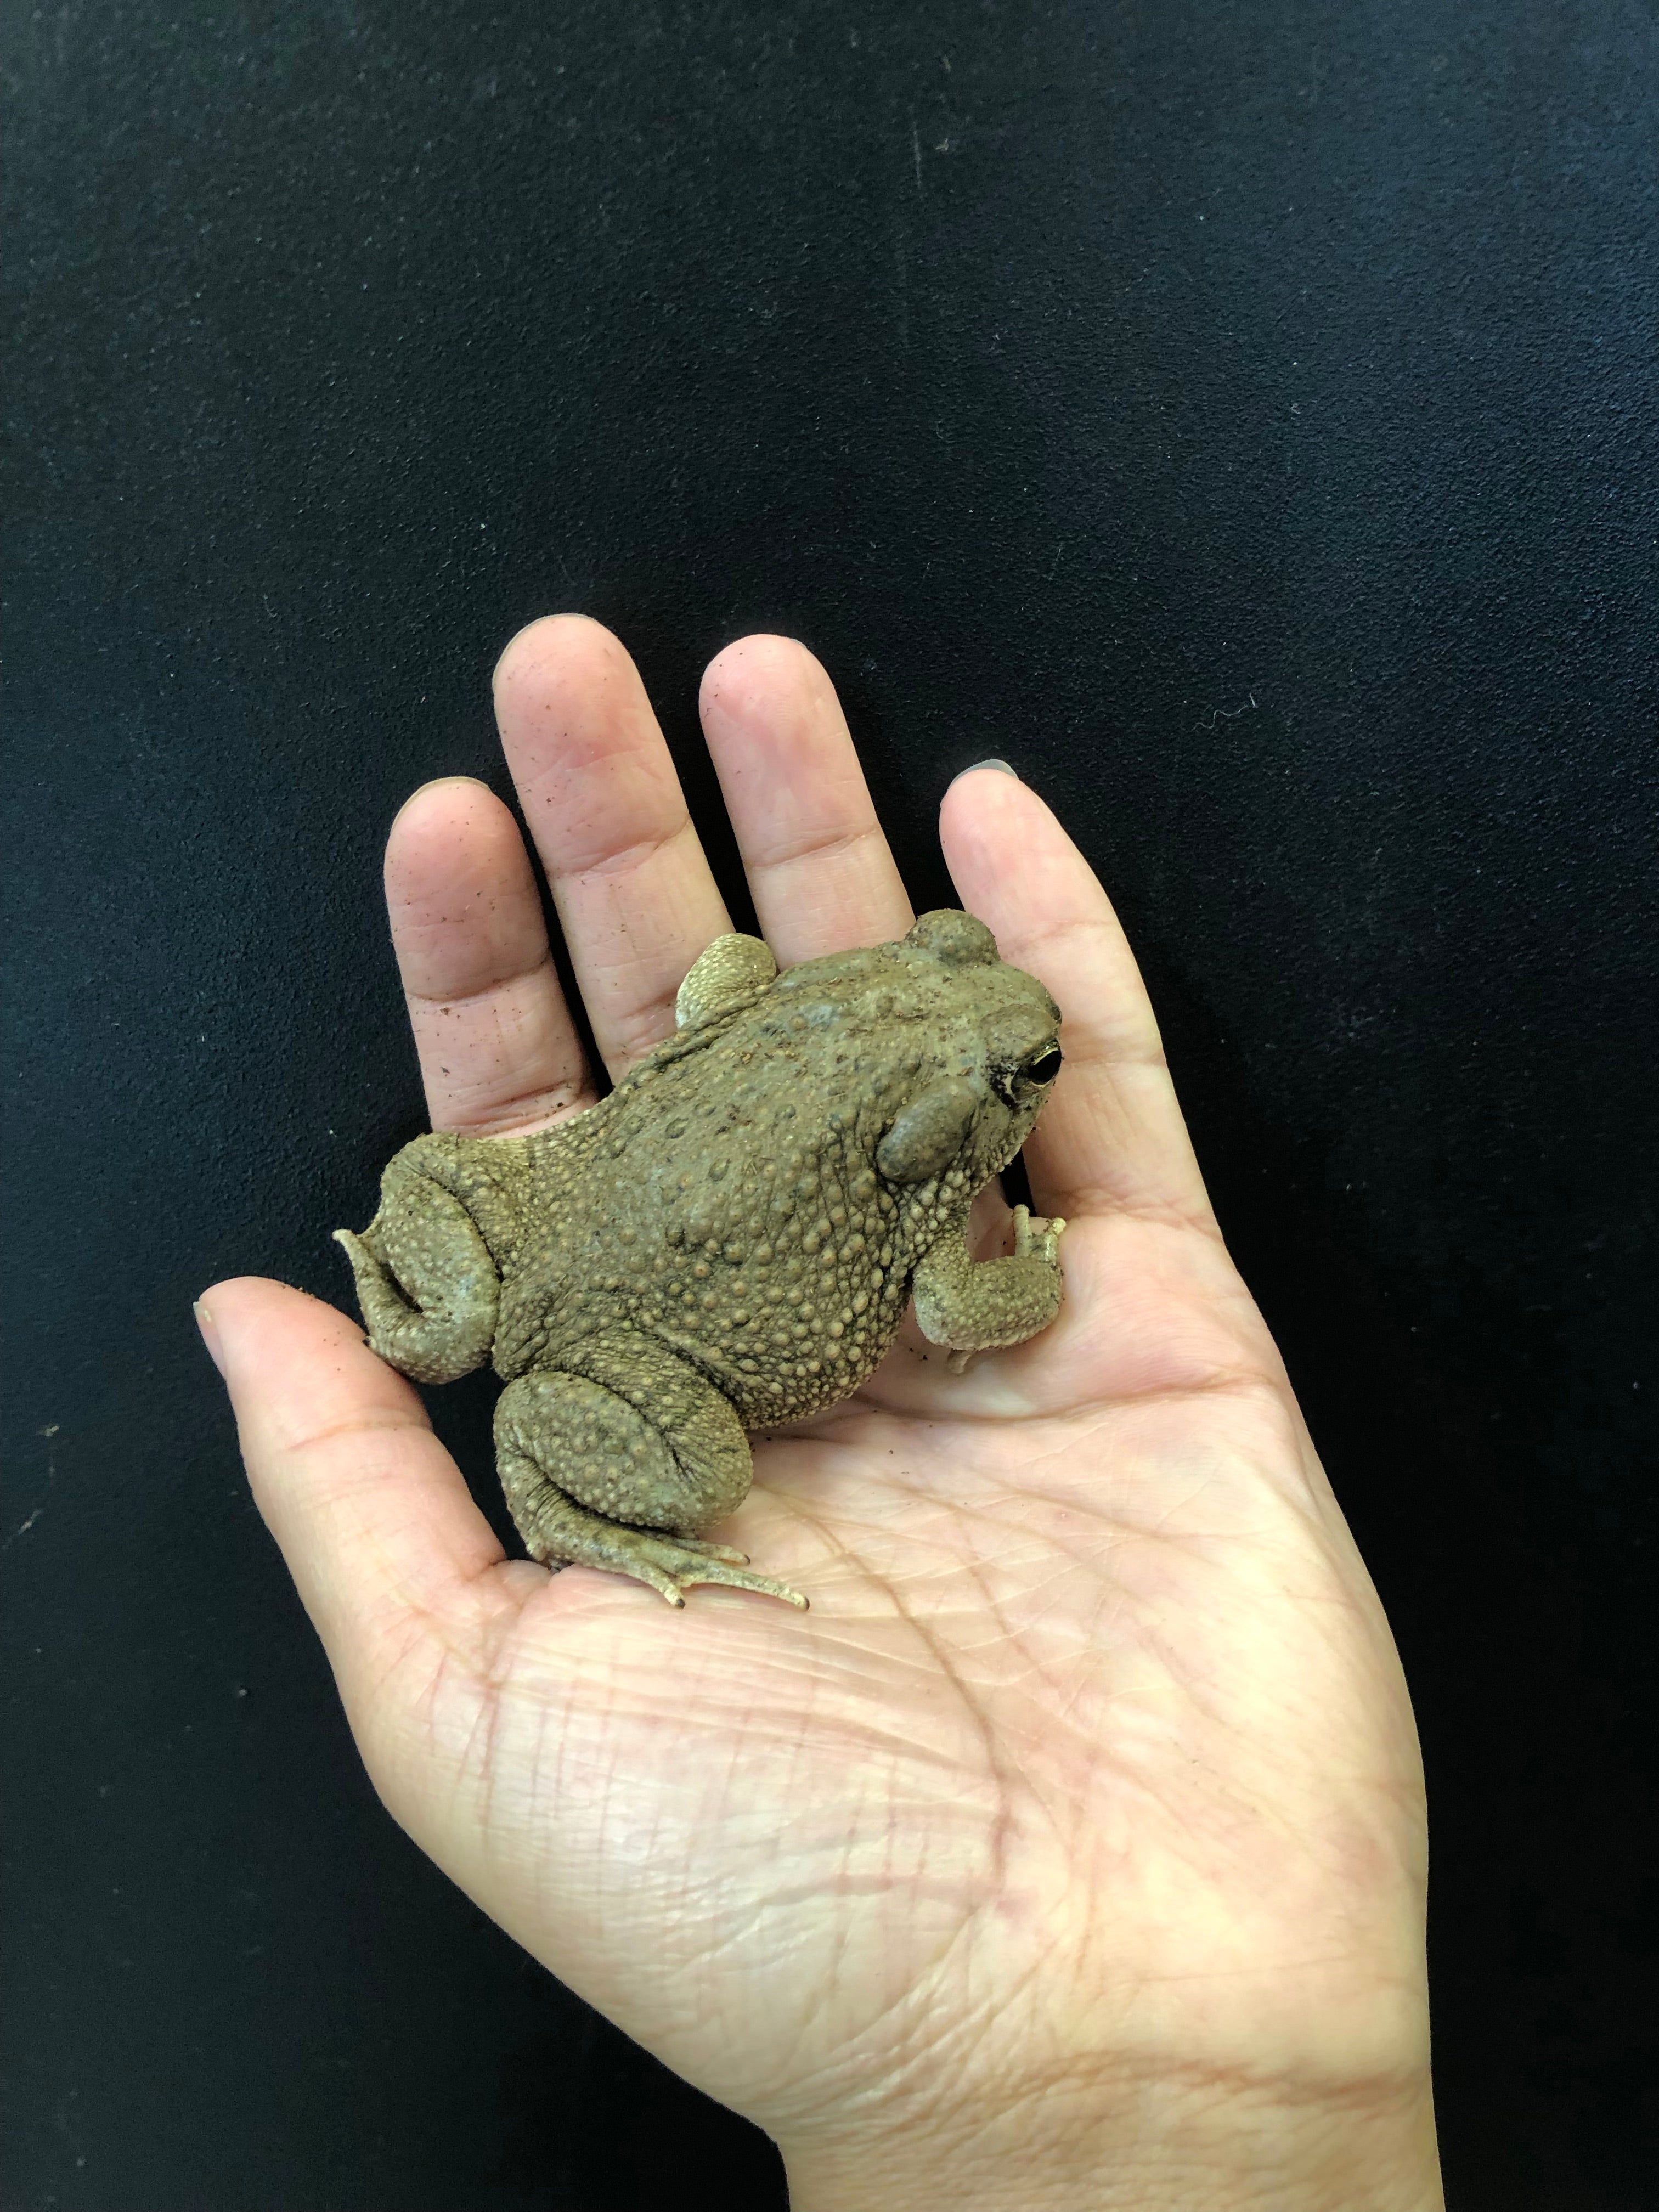 Texas Toad